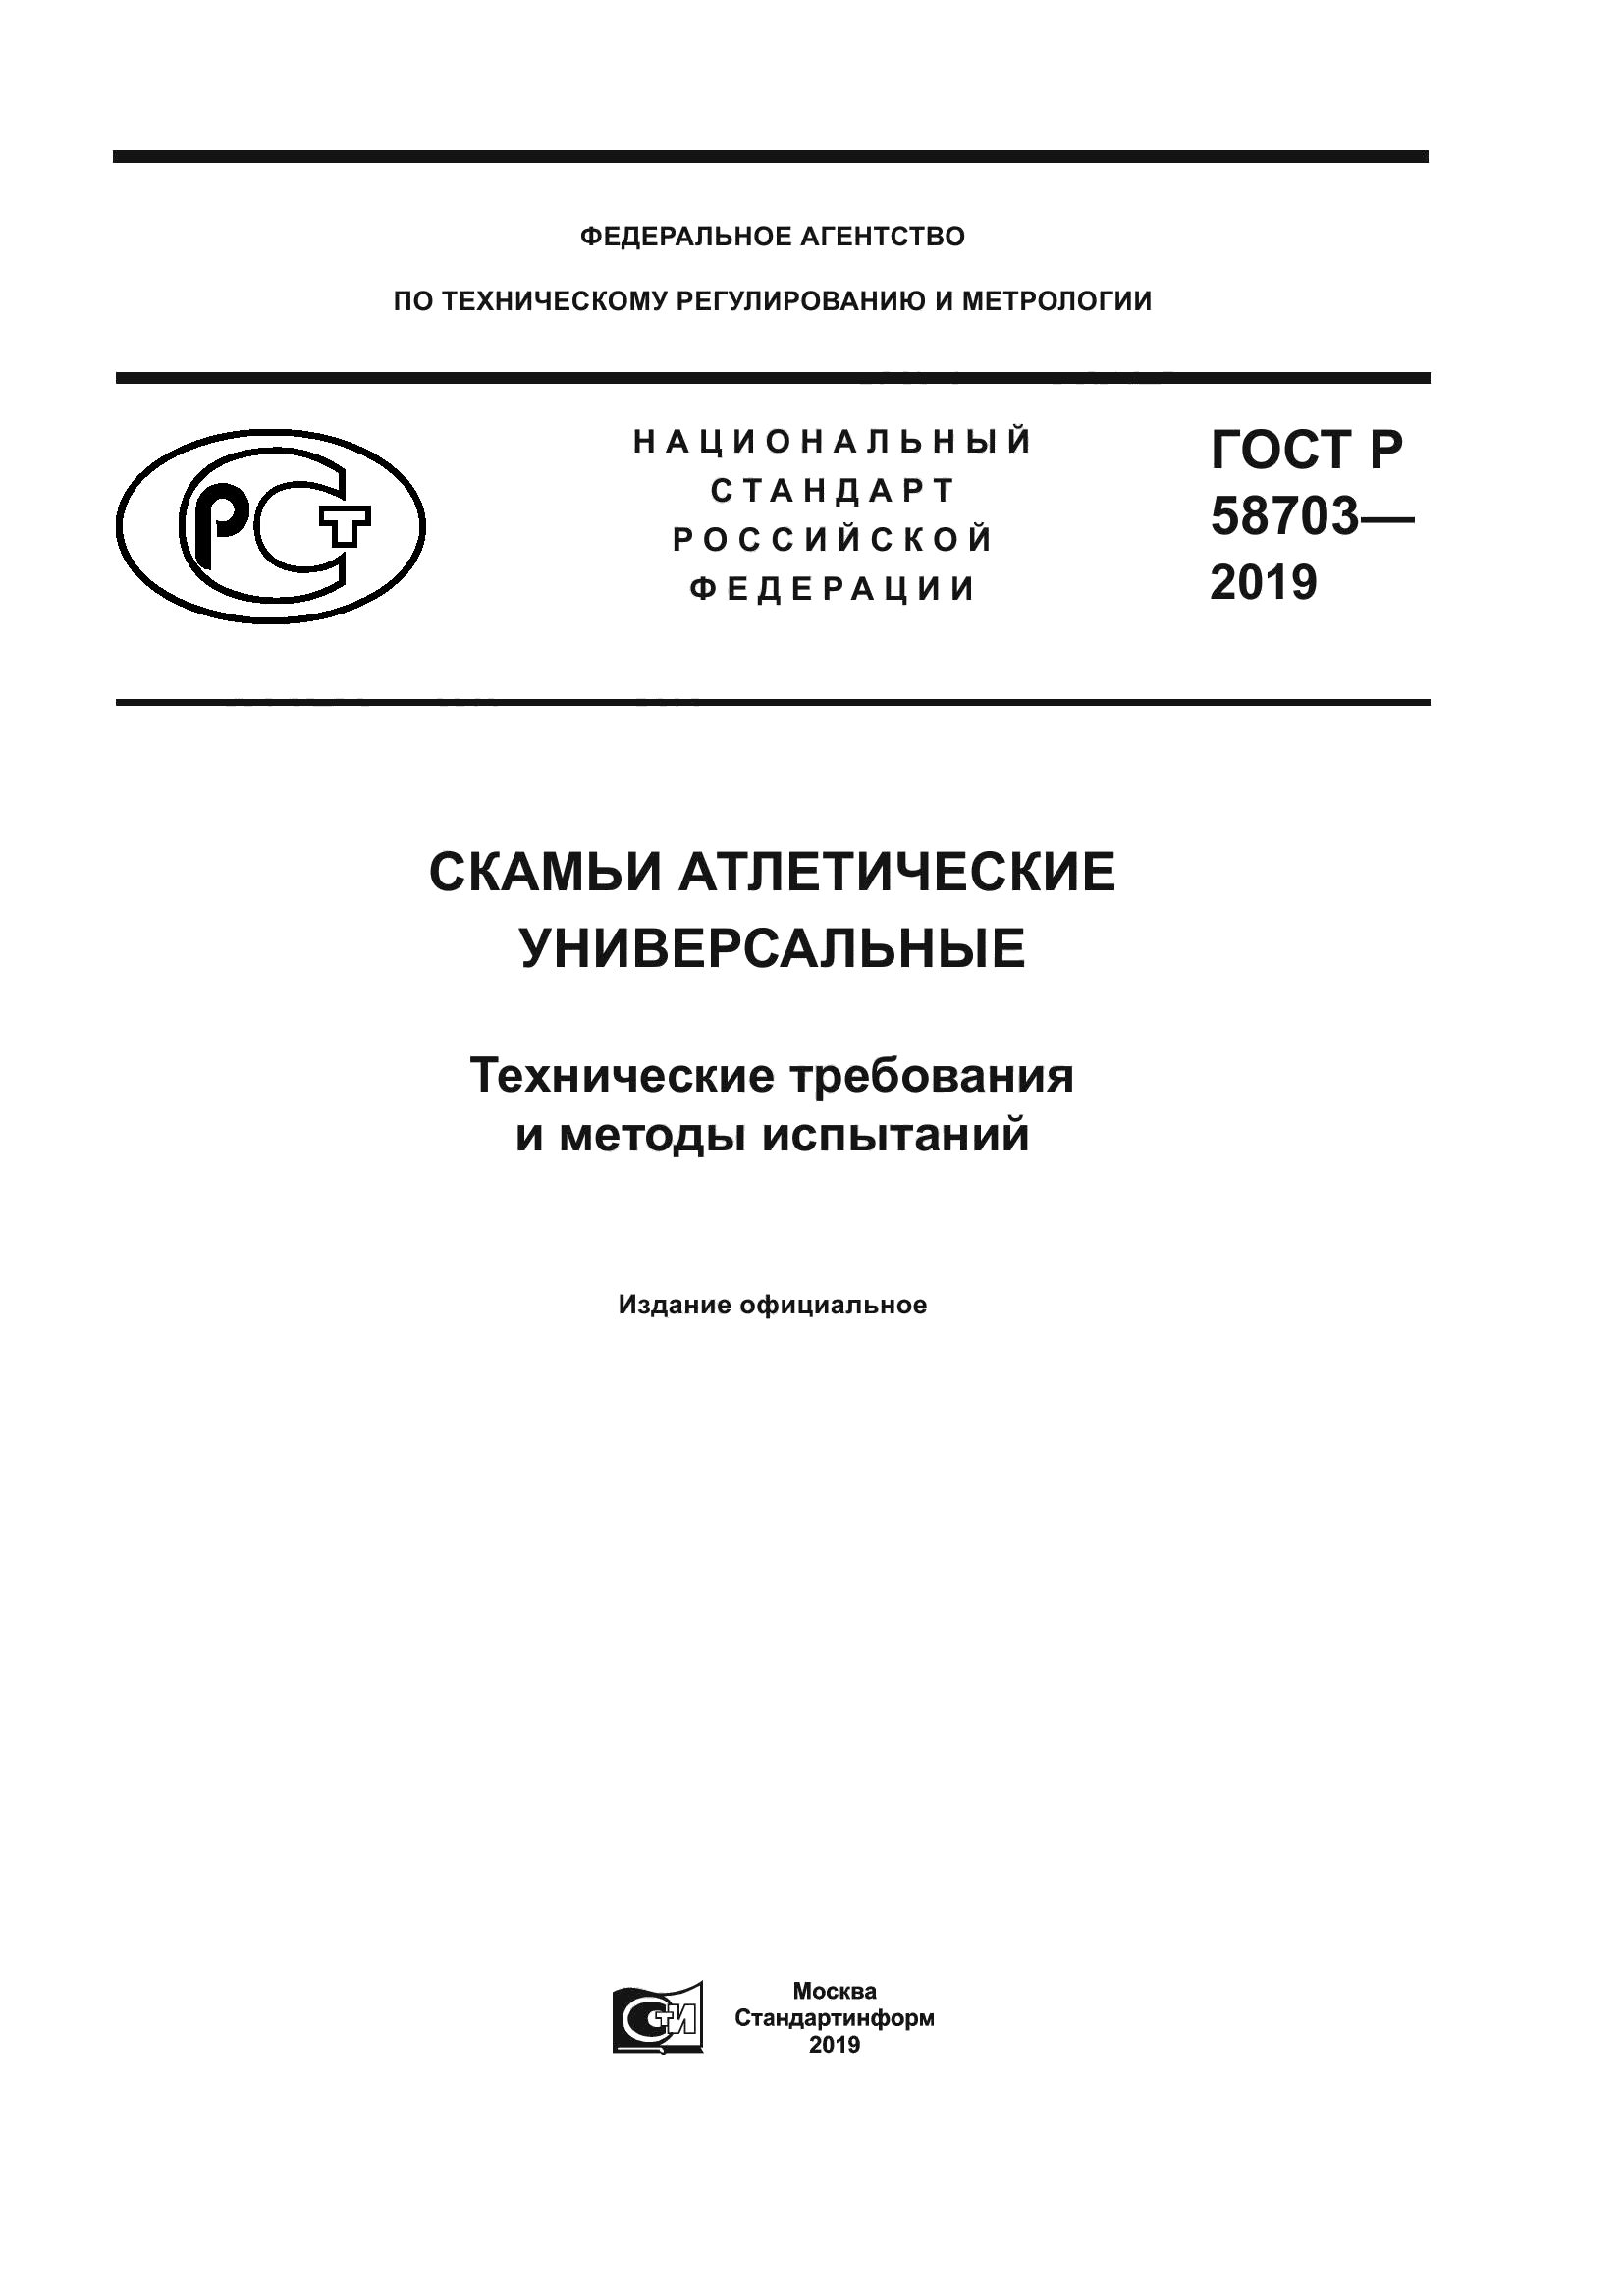 ГОСТ Р 58703-2019